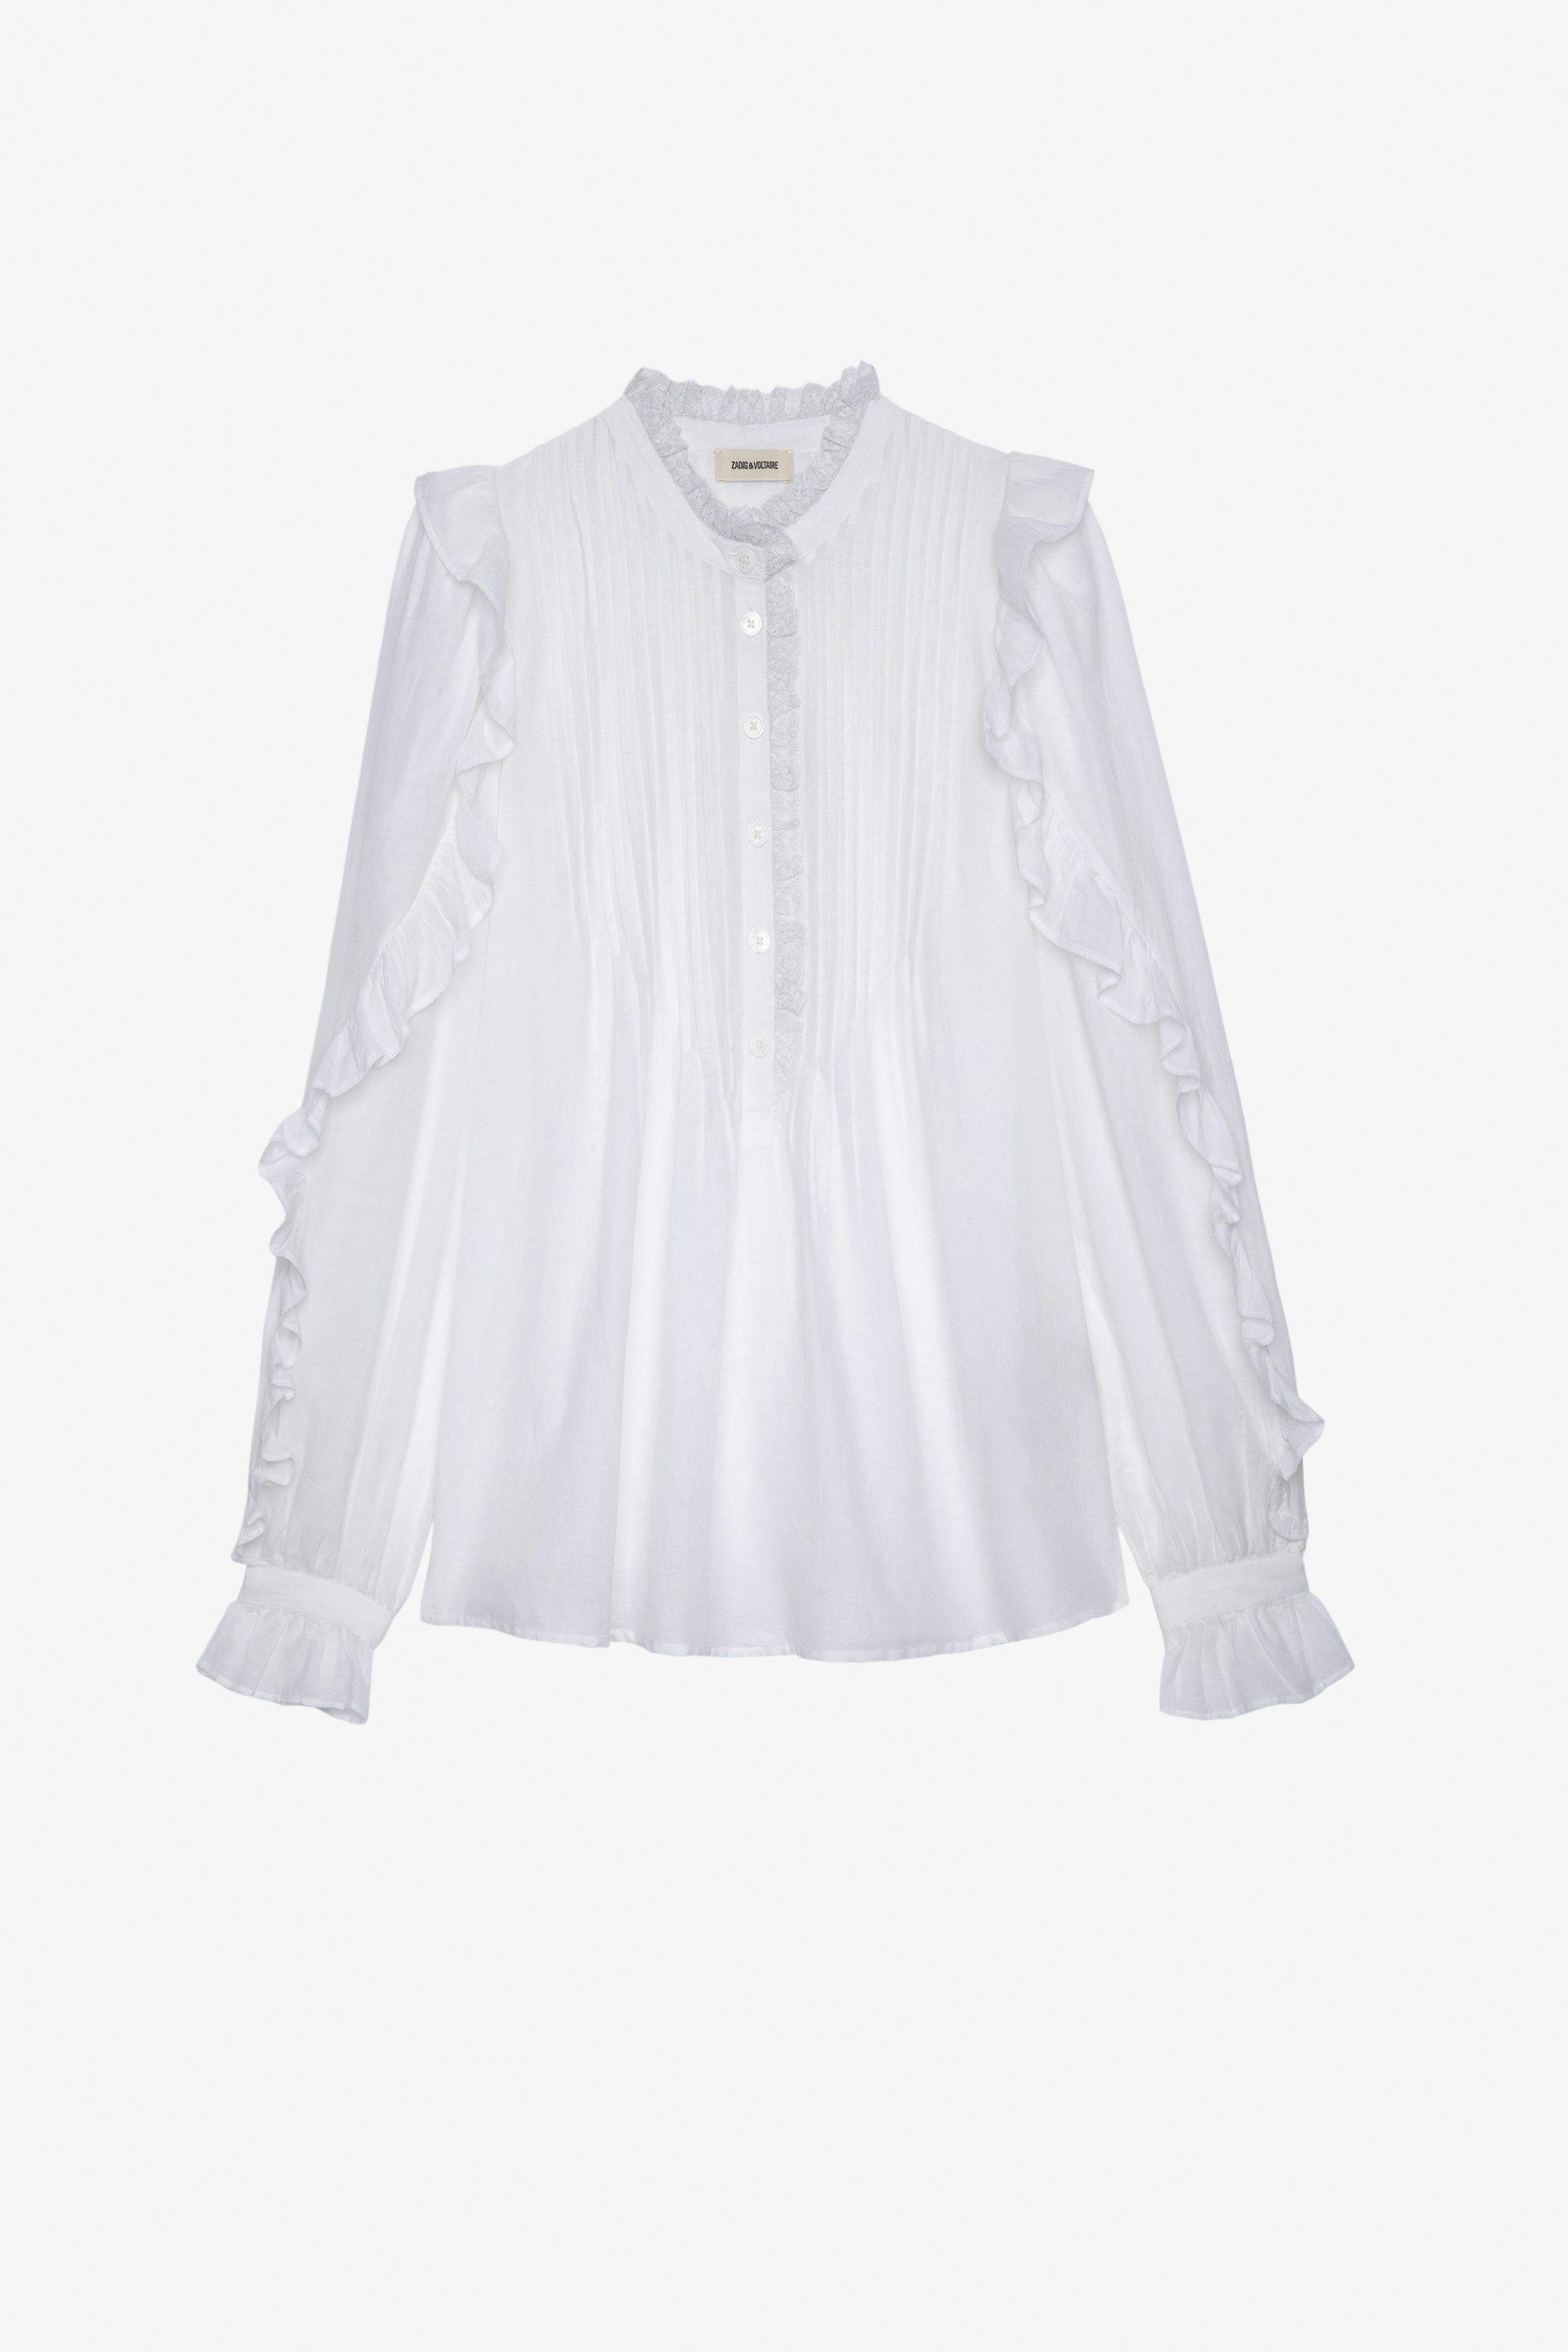 Timmy Blouse - Women's white cotton shirt with ruffles